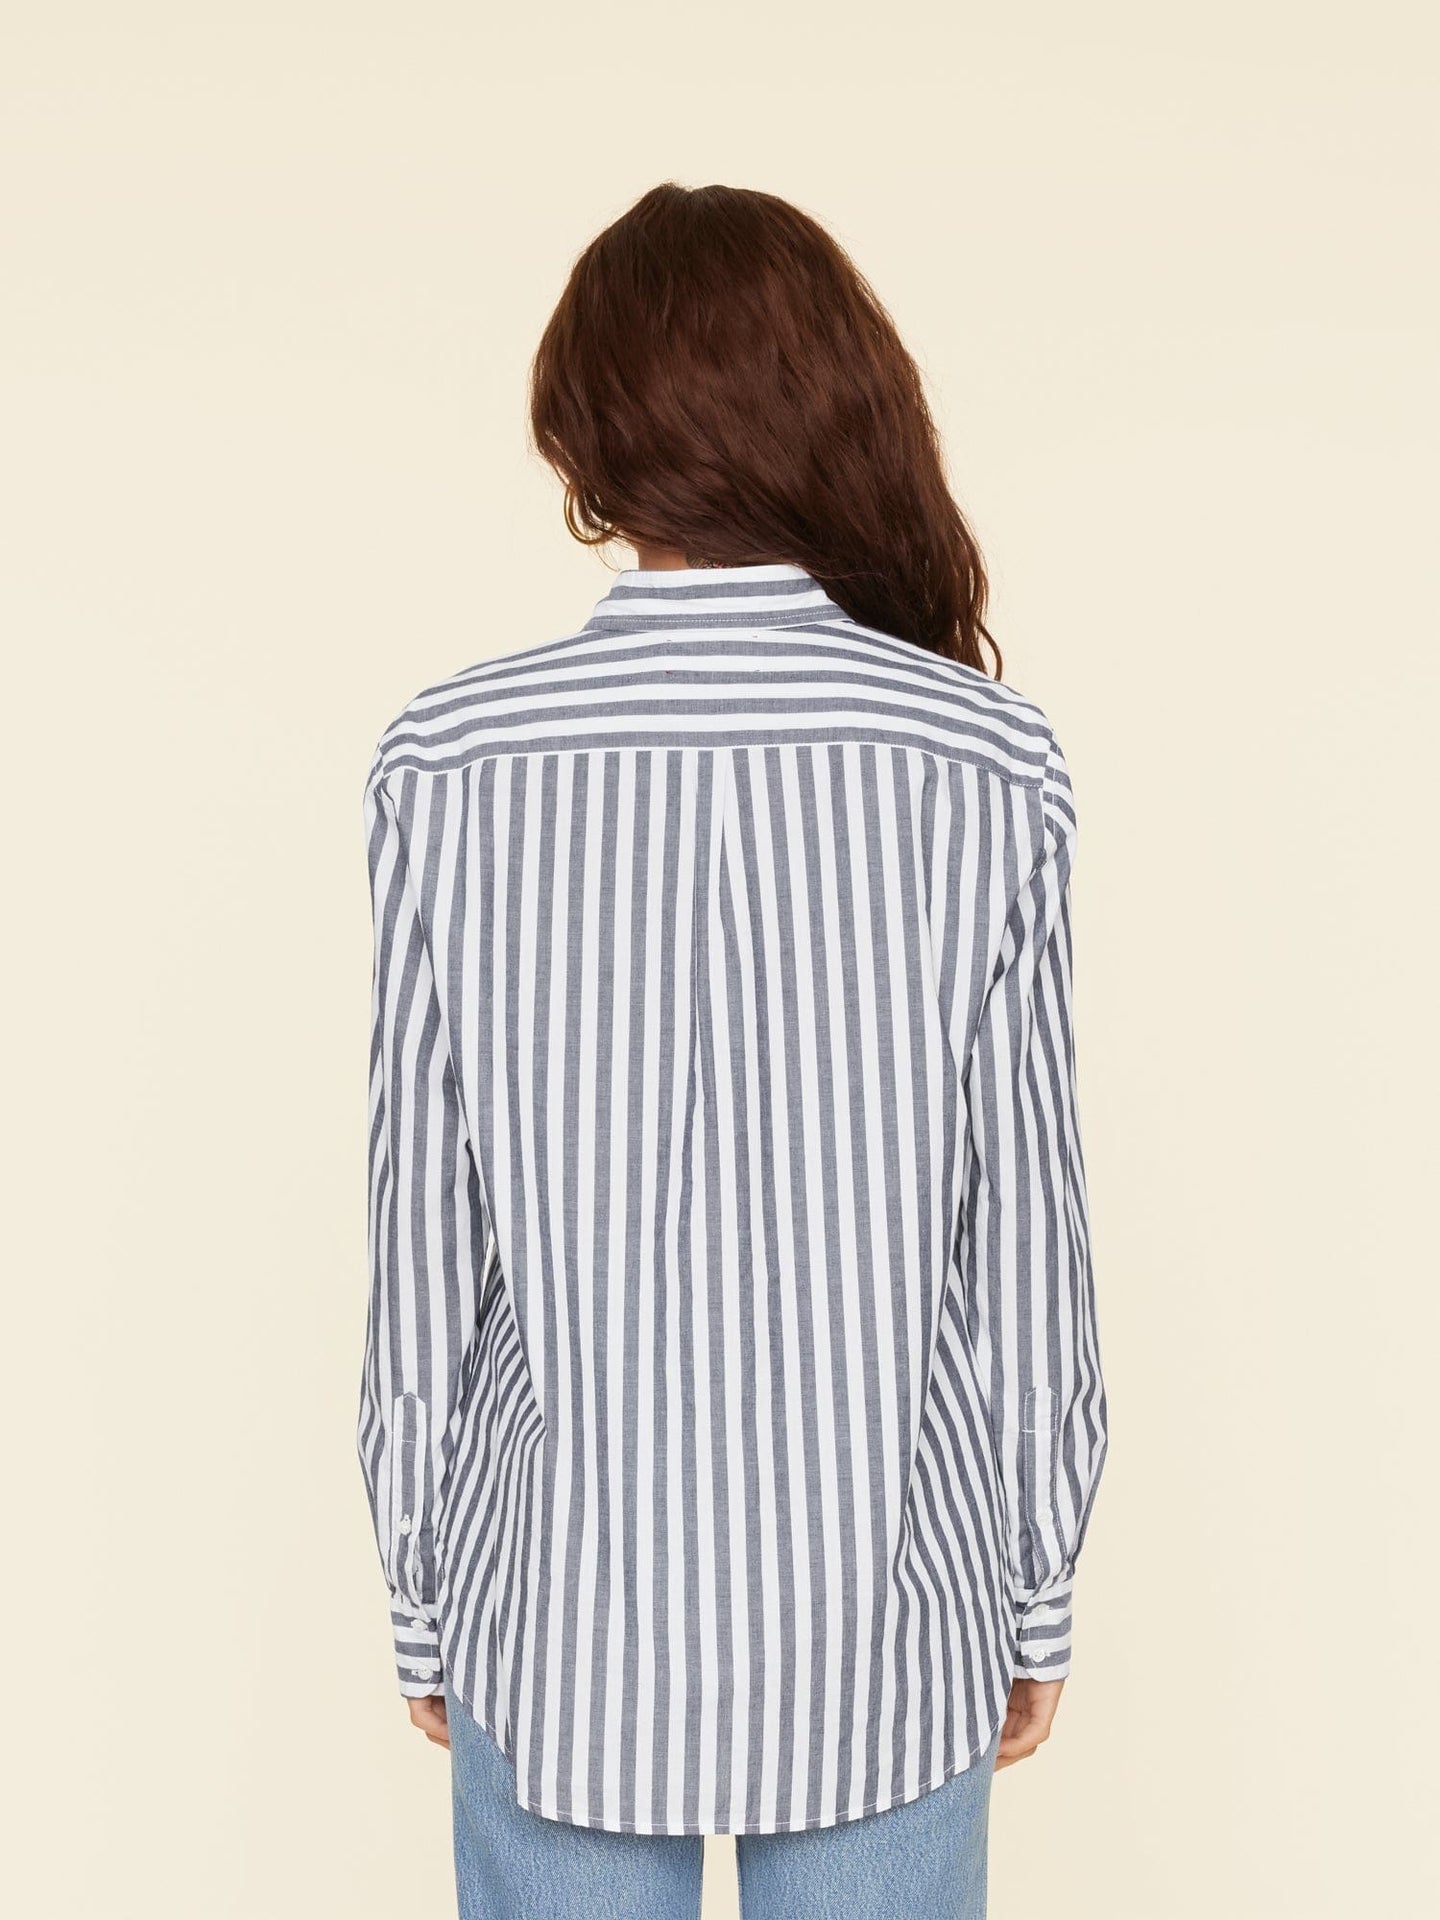 Beau Shirt - Twilight Stripe